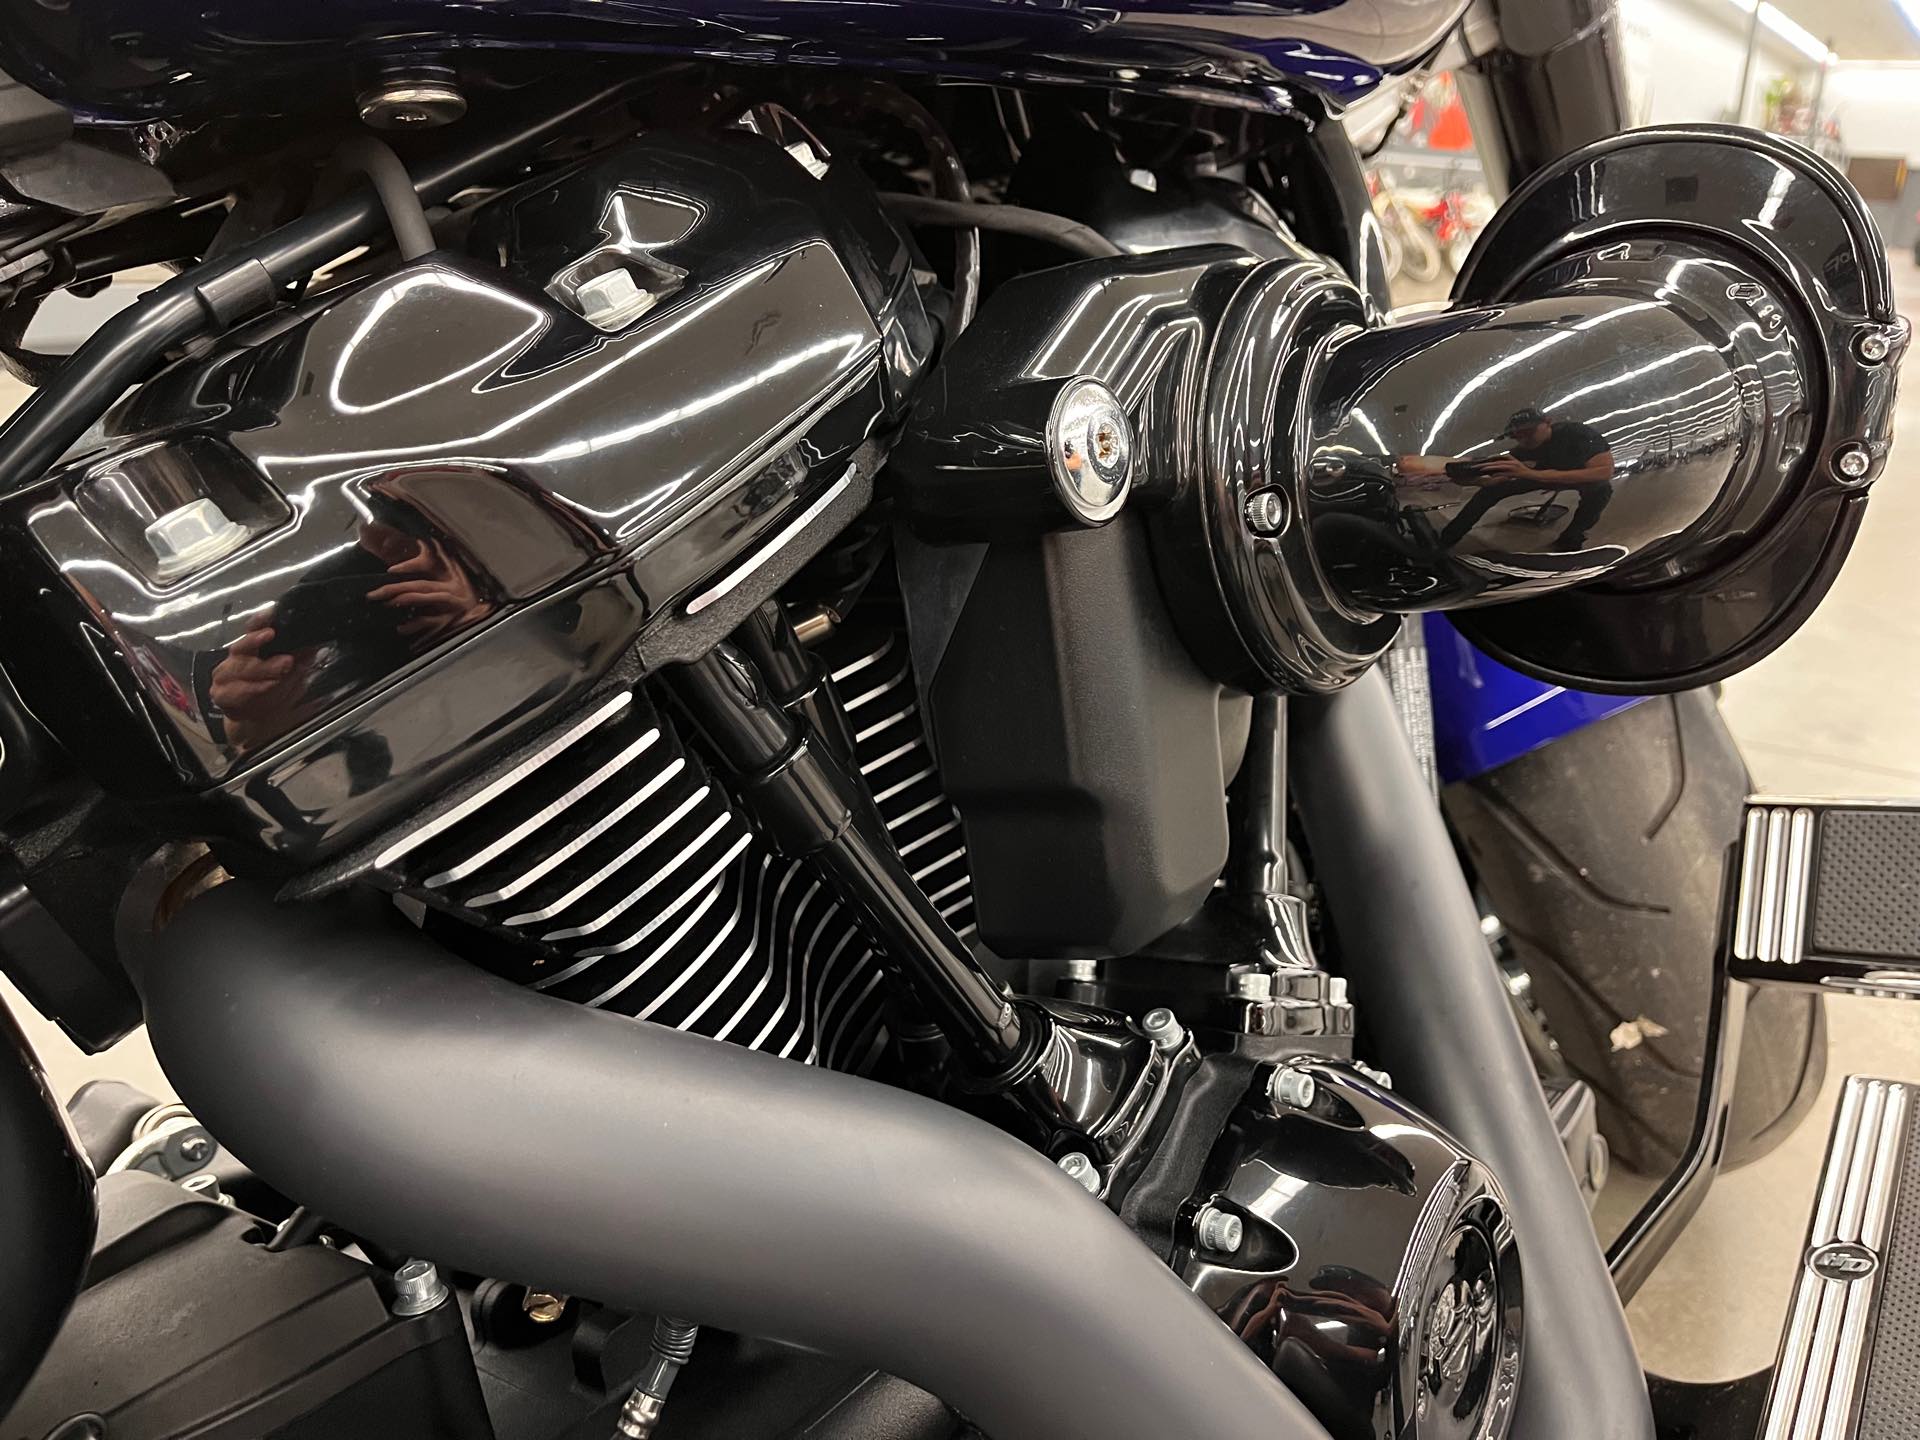 2020 Harley-Davidson Softail Fat Boy 114 at Aces Motorcycles - Denver